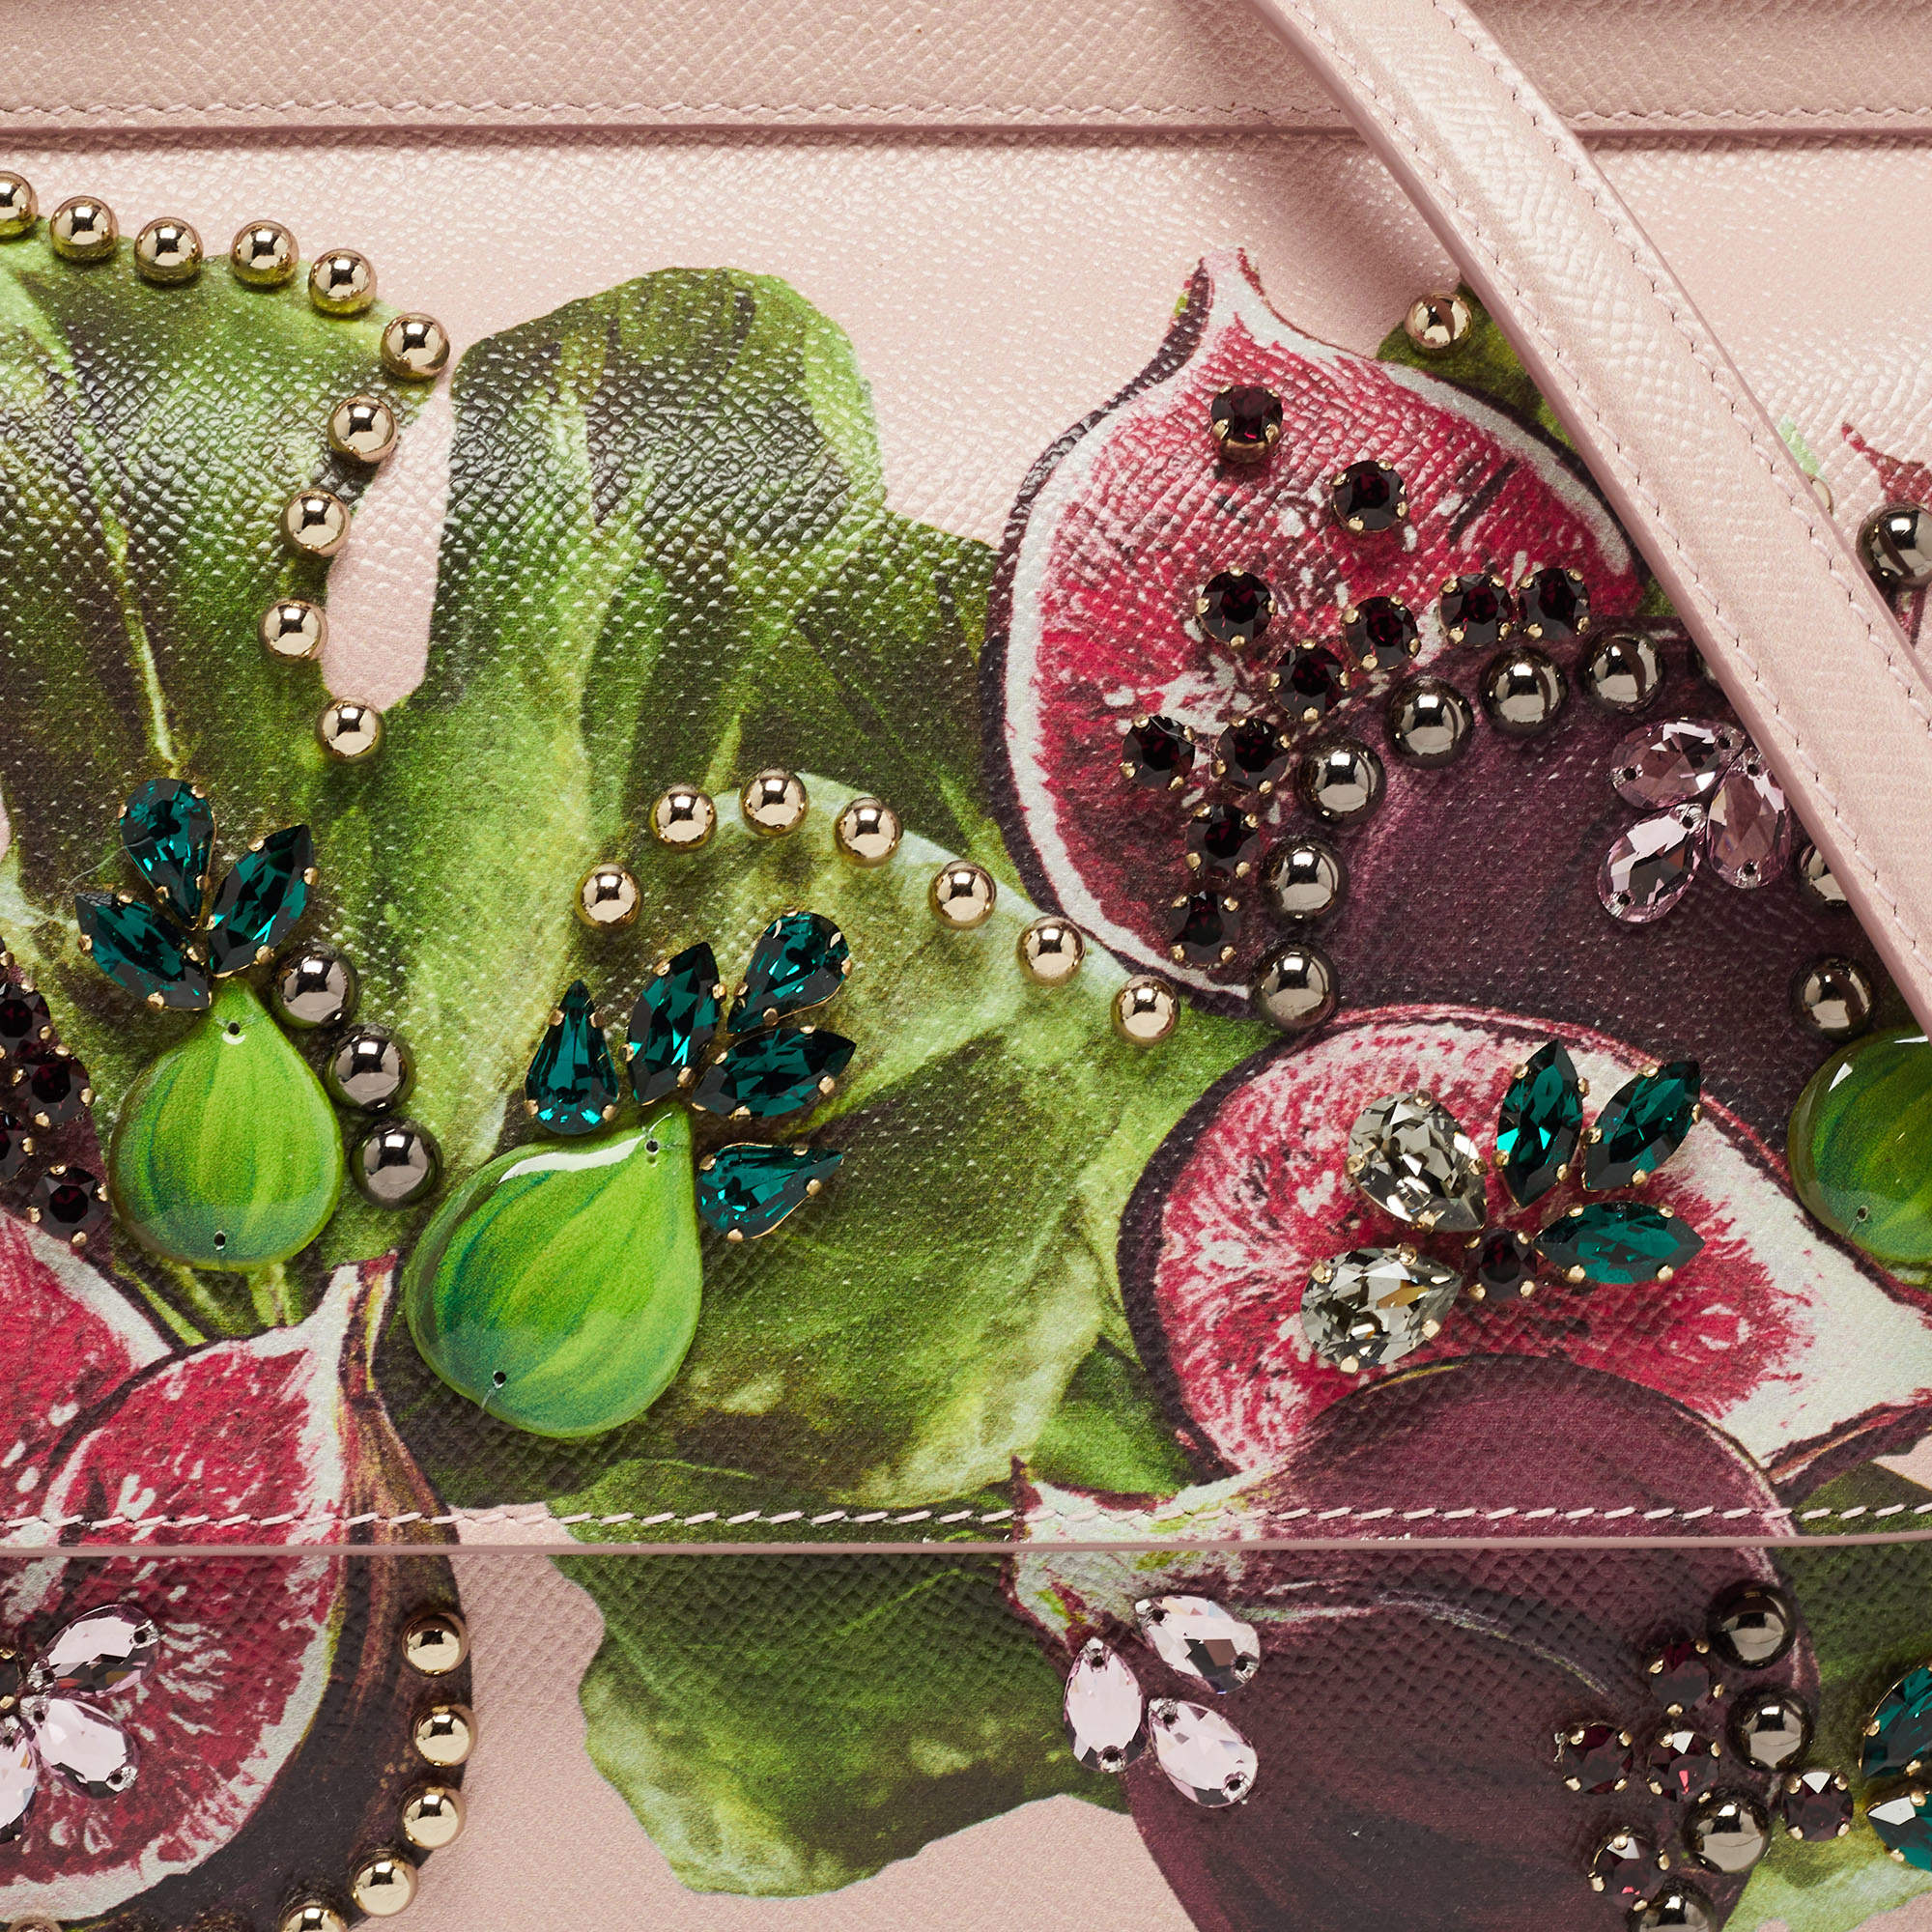 Dolce & Gabbana Large Miss Sicily Handle Bag - Pink Handle Bags, Handbags -  DAG396513